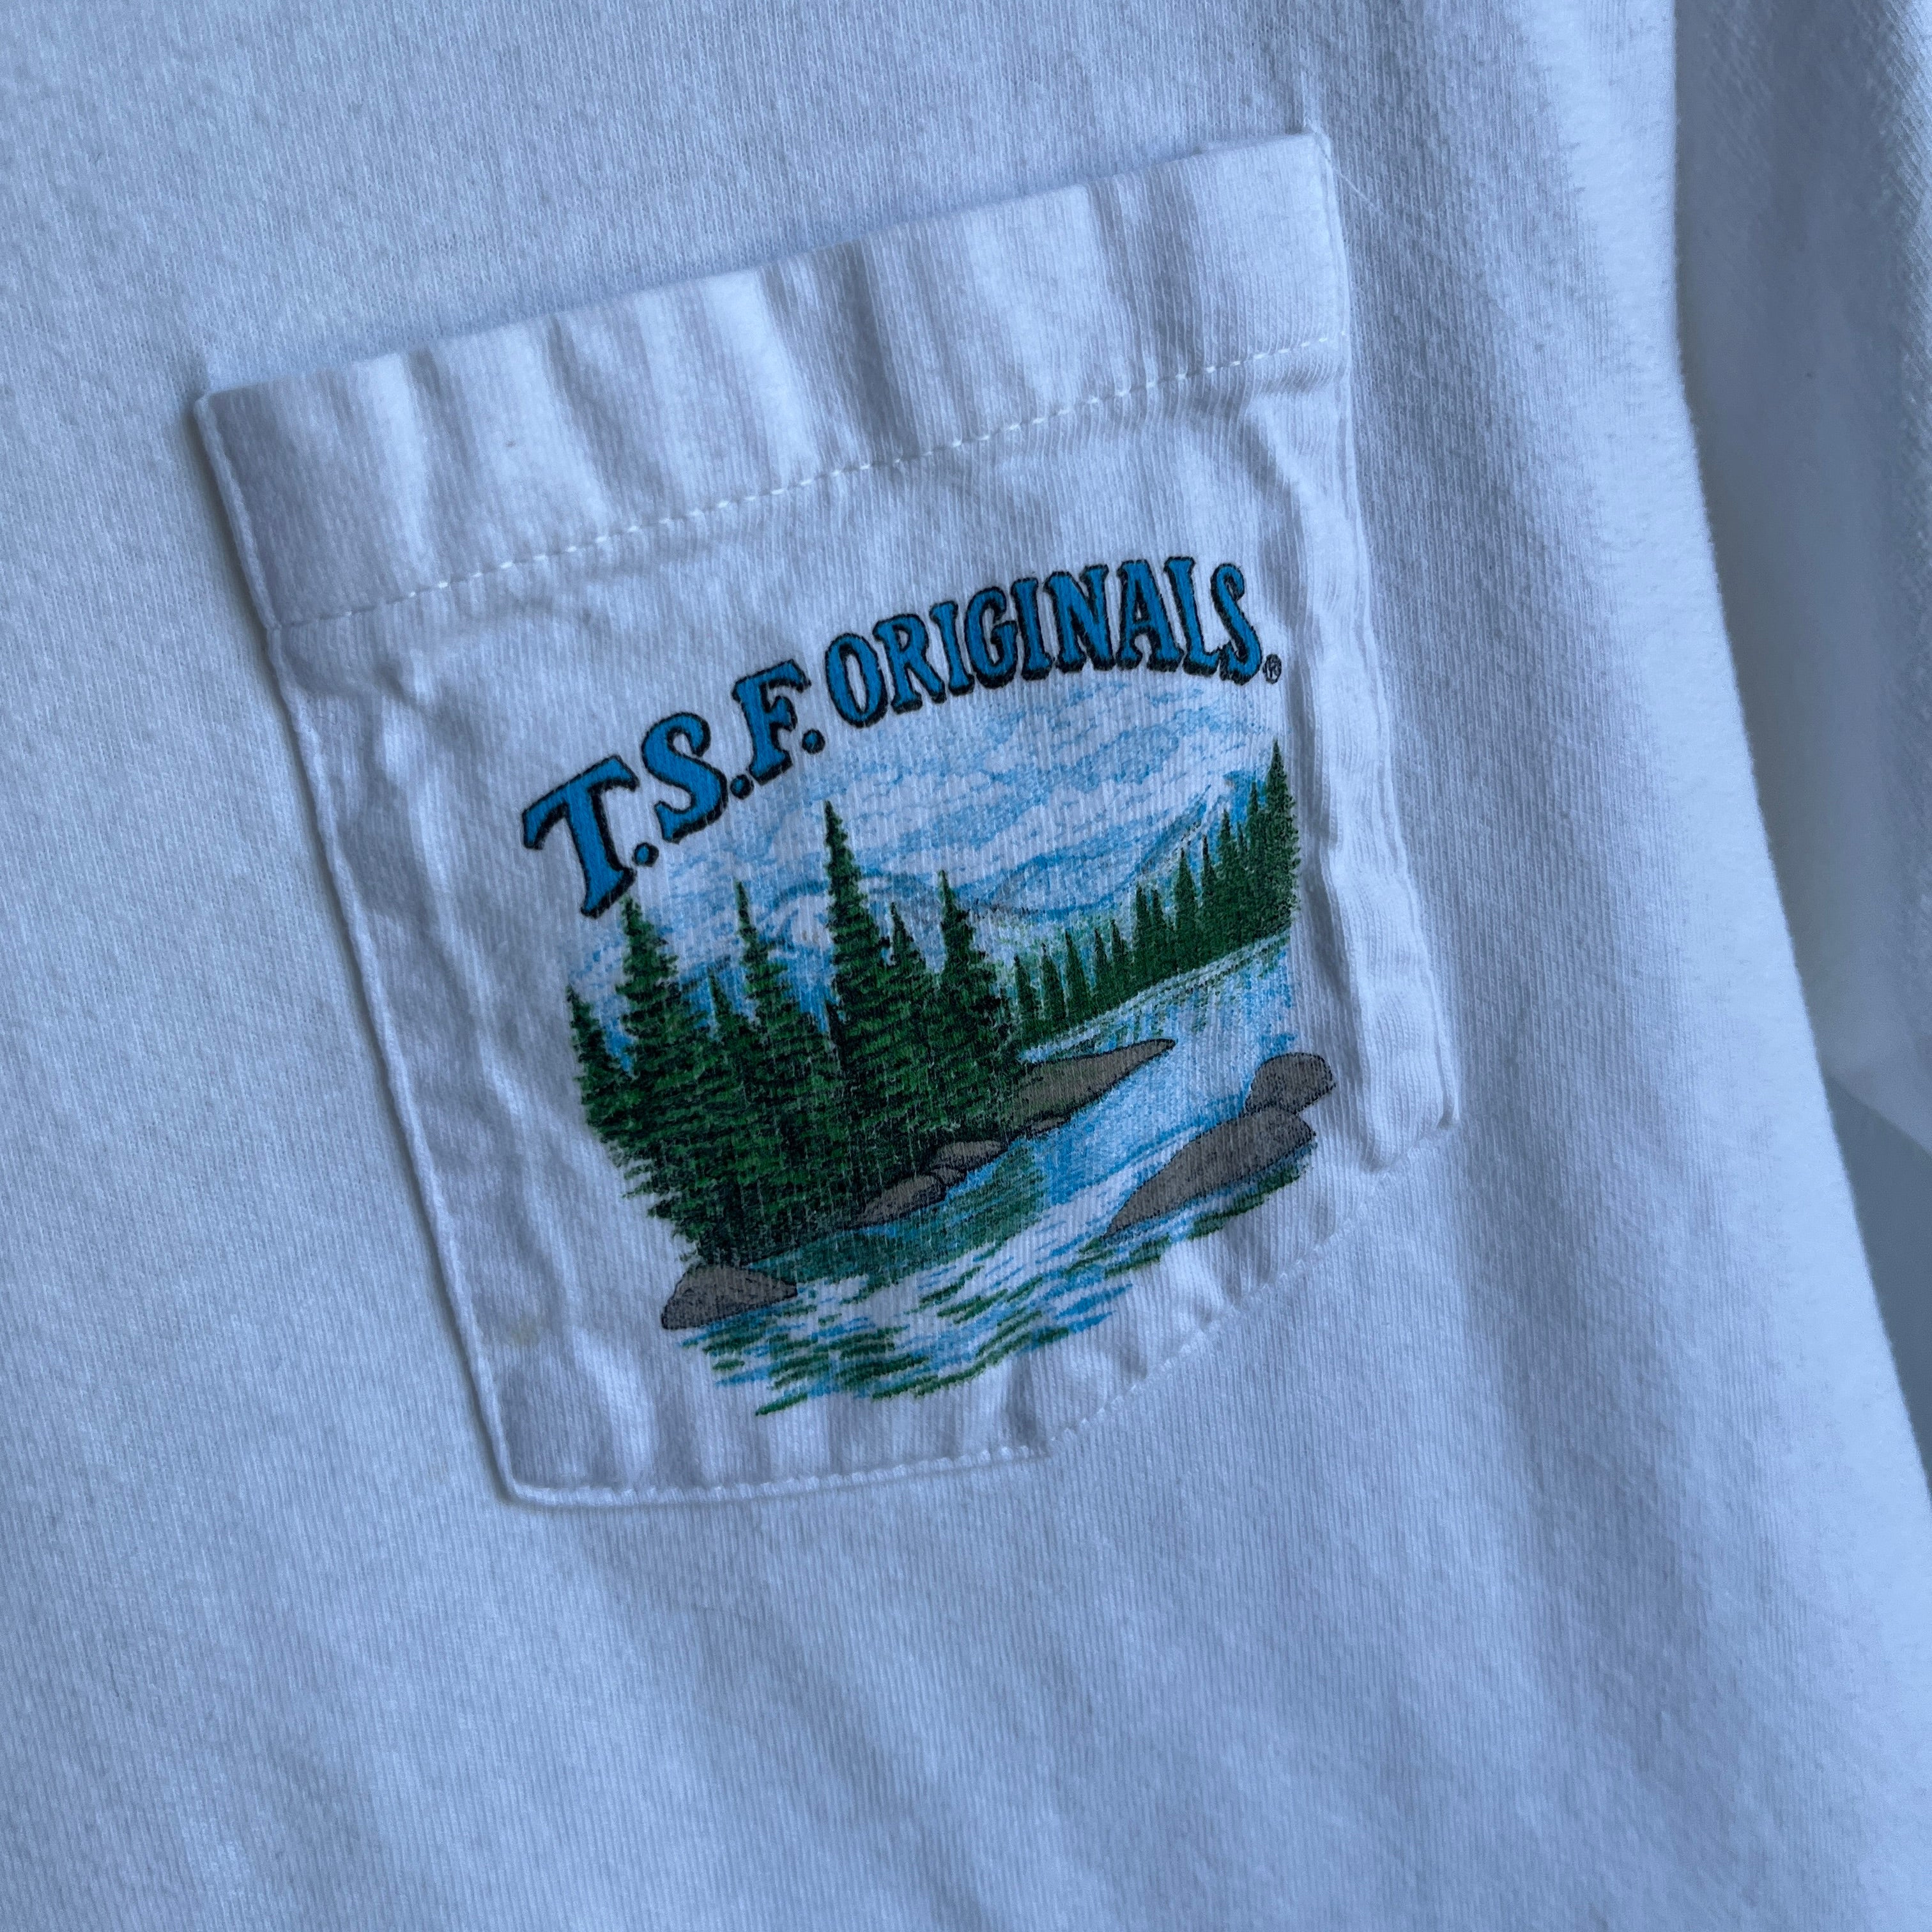 1990s T.S.F. Originals Best Good Buddy On the Backside Pocket T-Shirt - Cotton